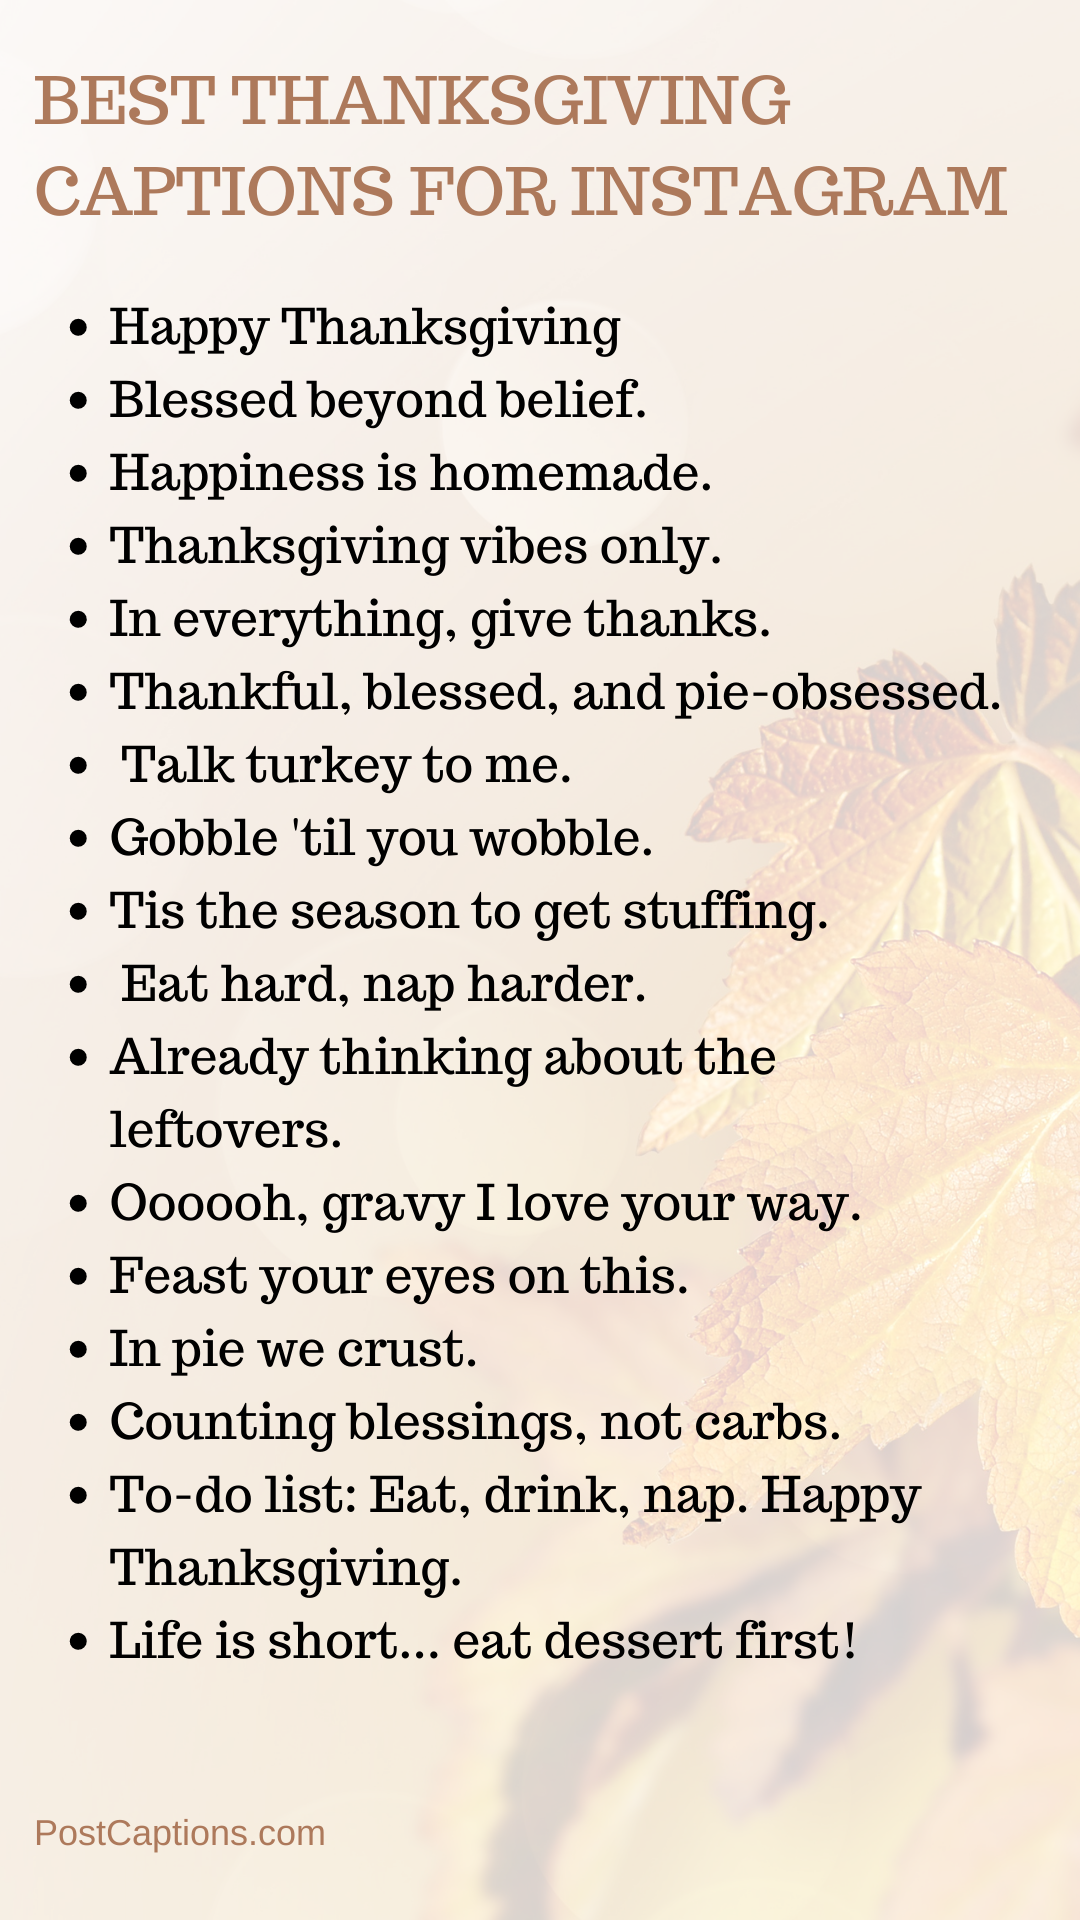 Thanksgiving captions